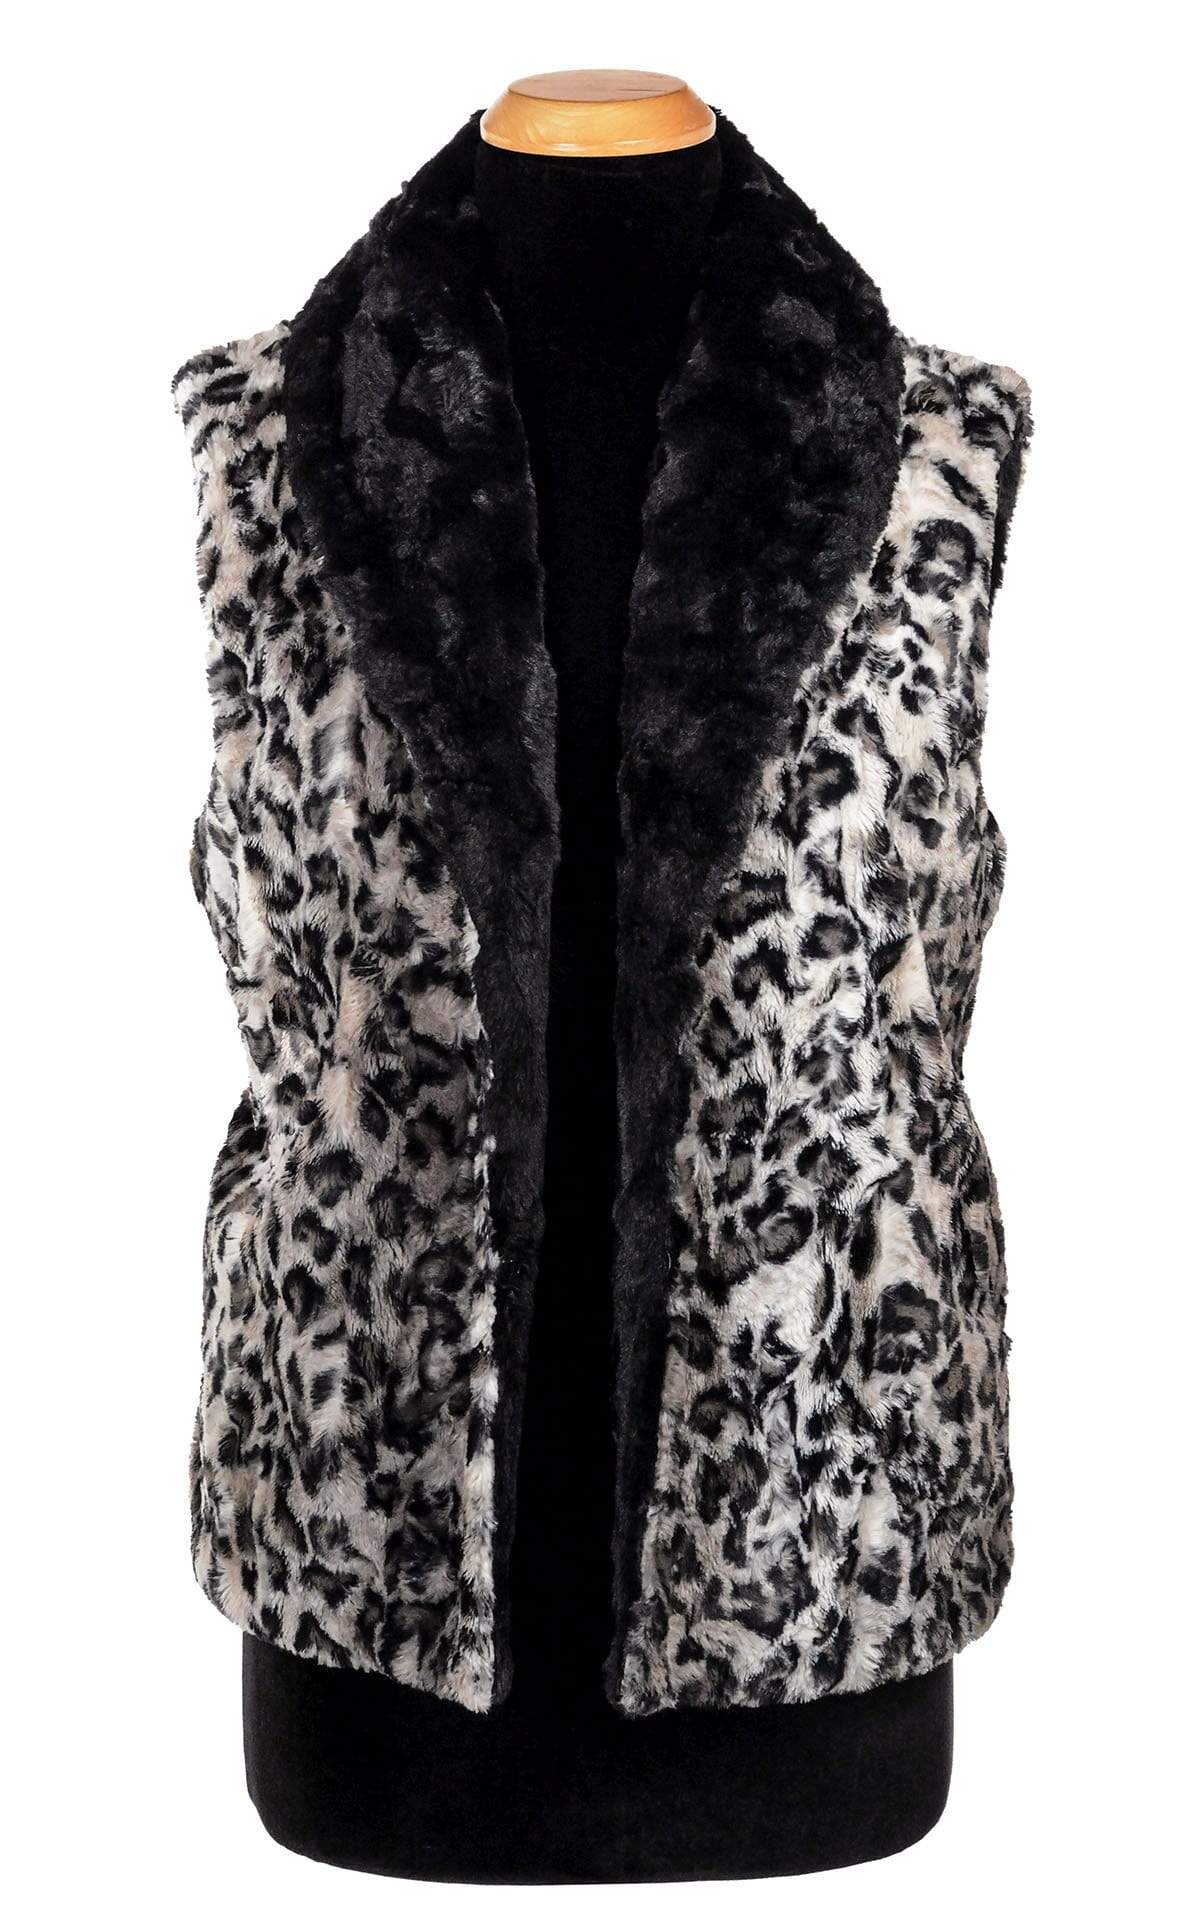 Shawl Collar Vest | Savannah Cat  Black Gray Animal print Faux Fur with Cuddly Black Faux Fur | Handmade by Pandemonium Millinery | Seattle WA USA